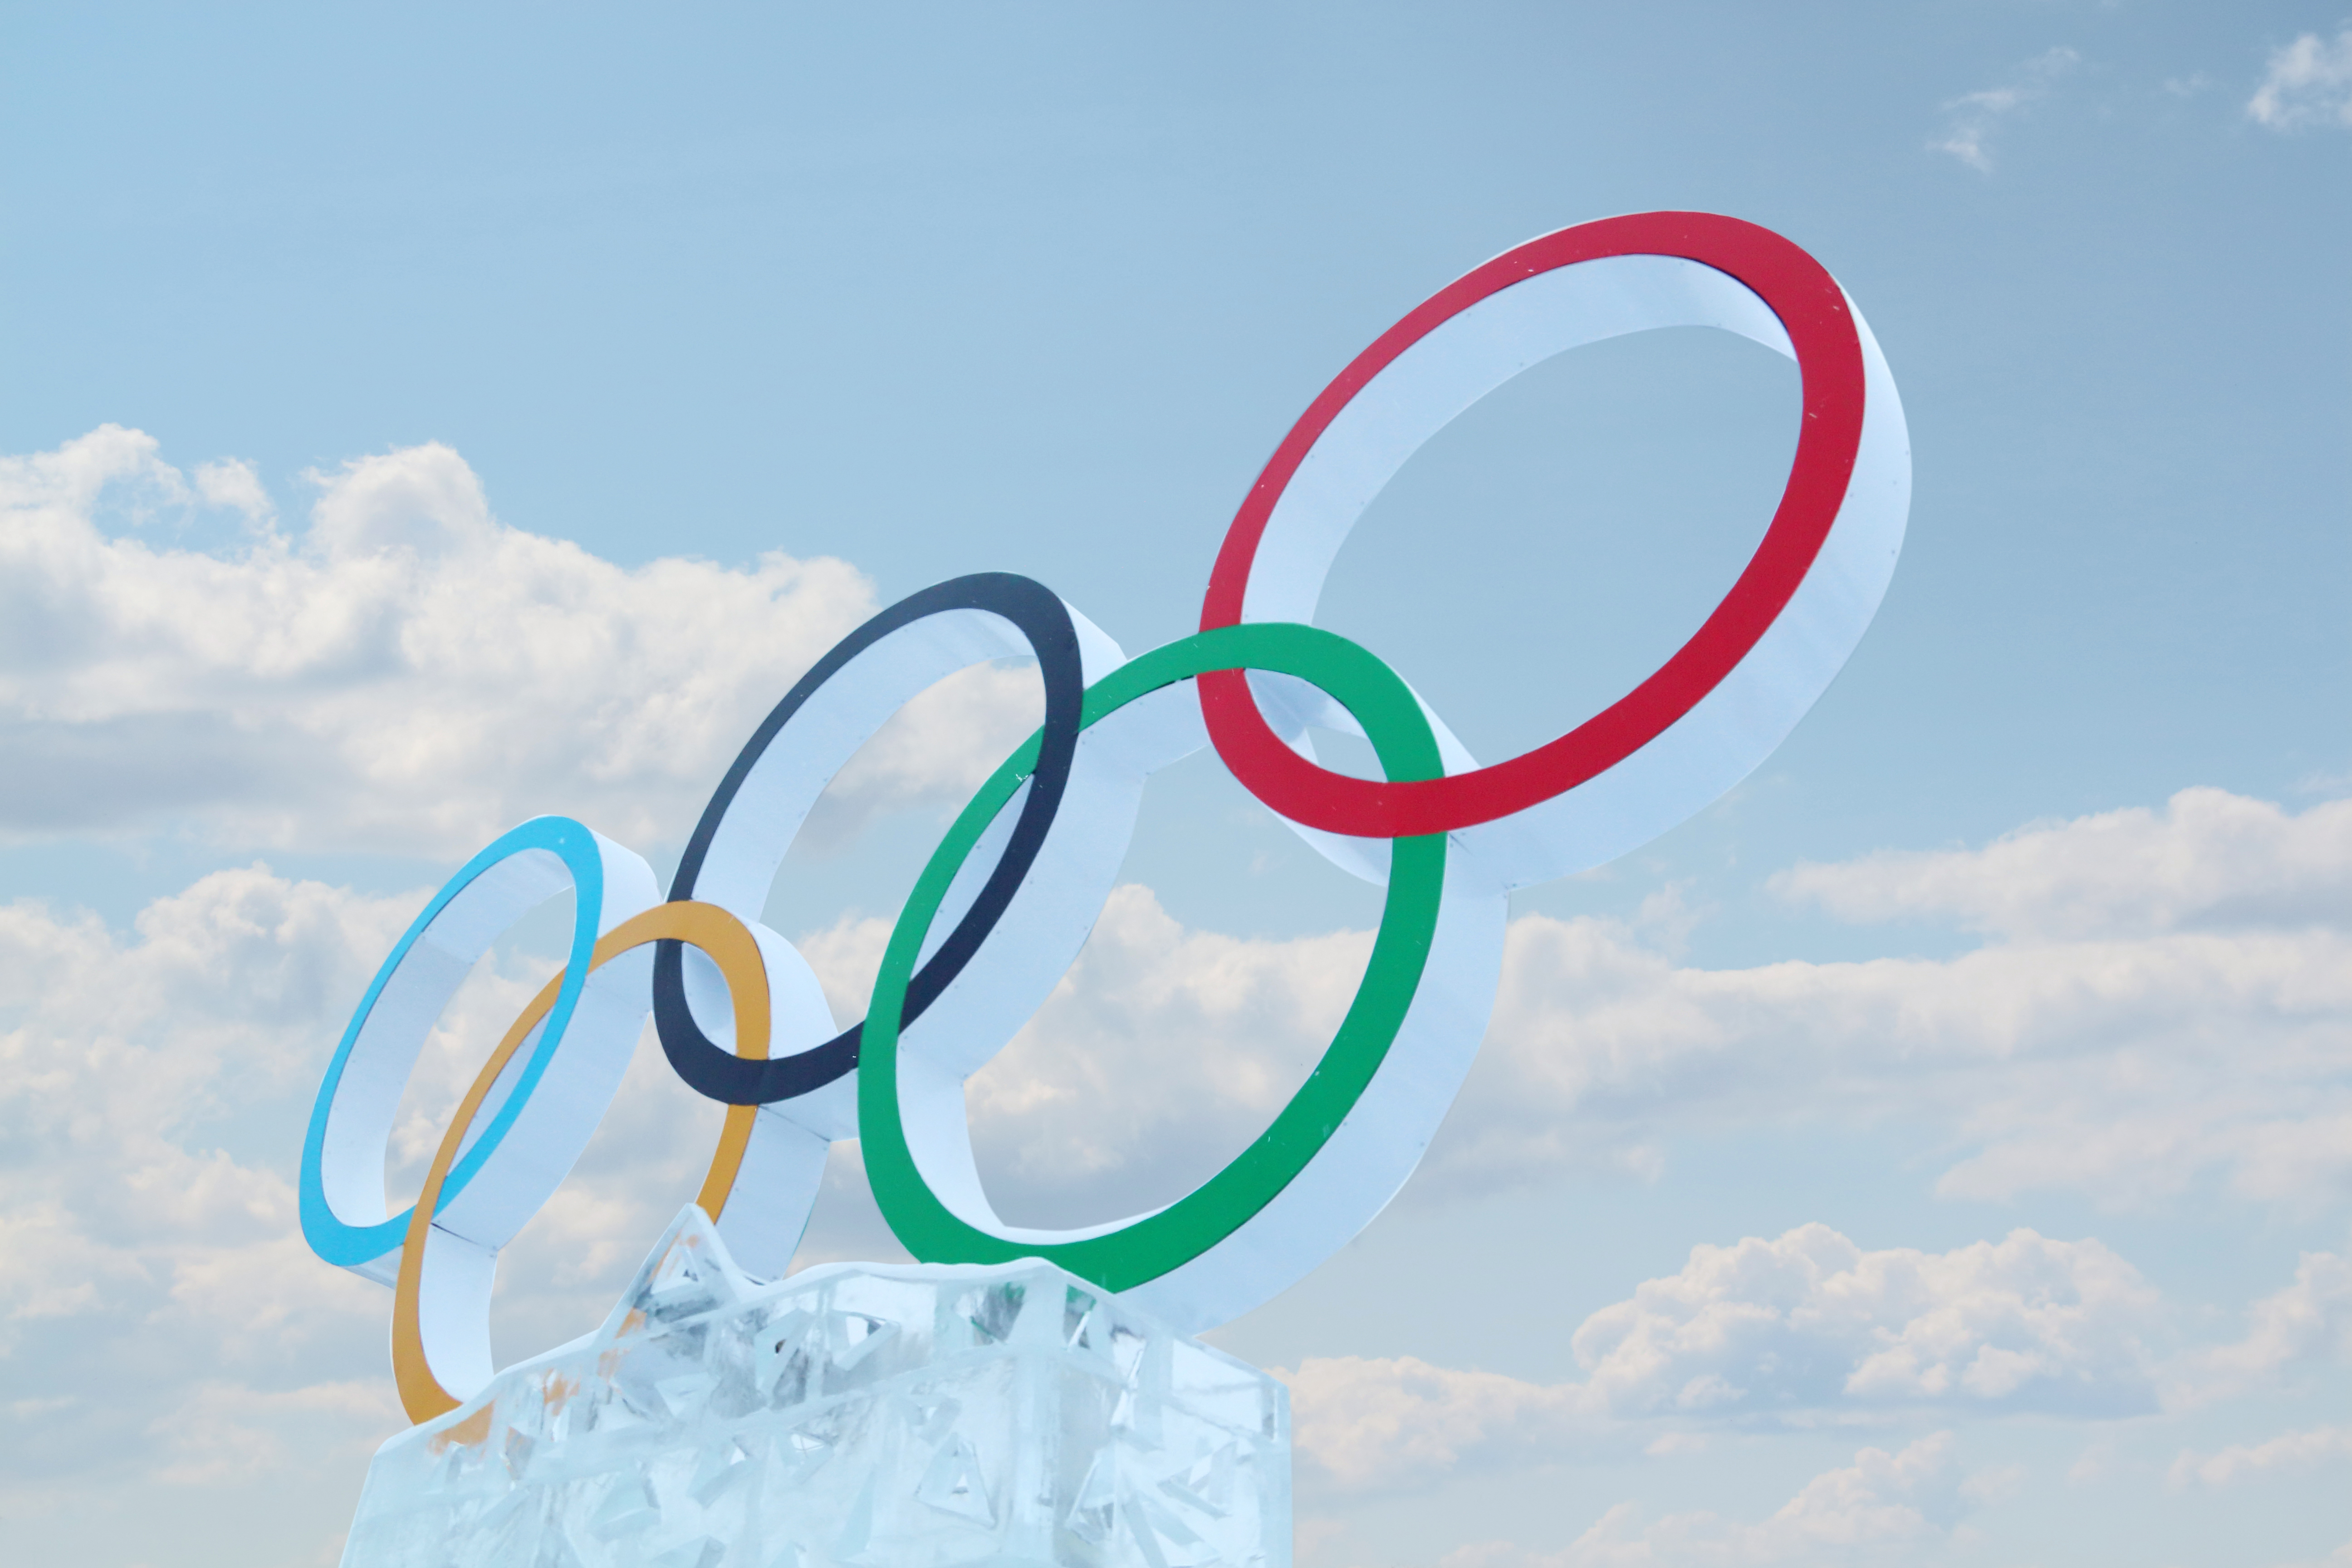 Символ Олимпийский игр во льду